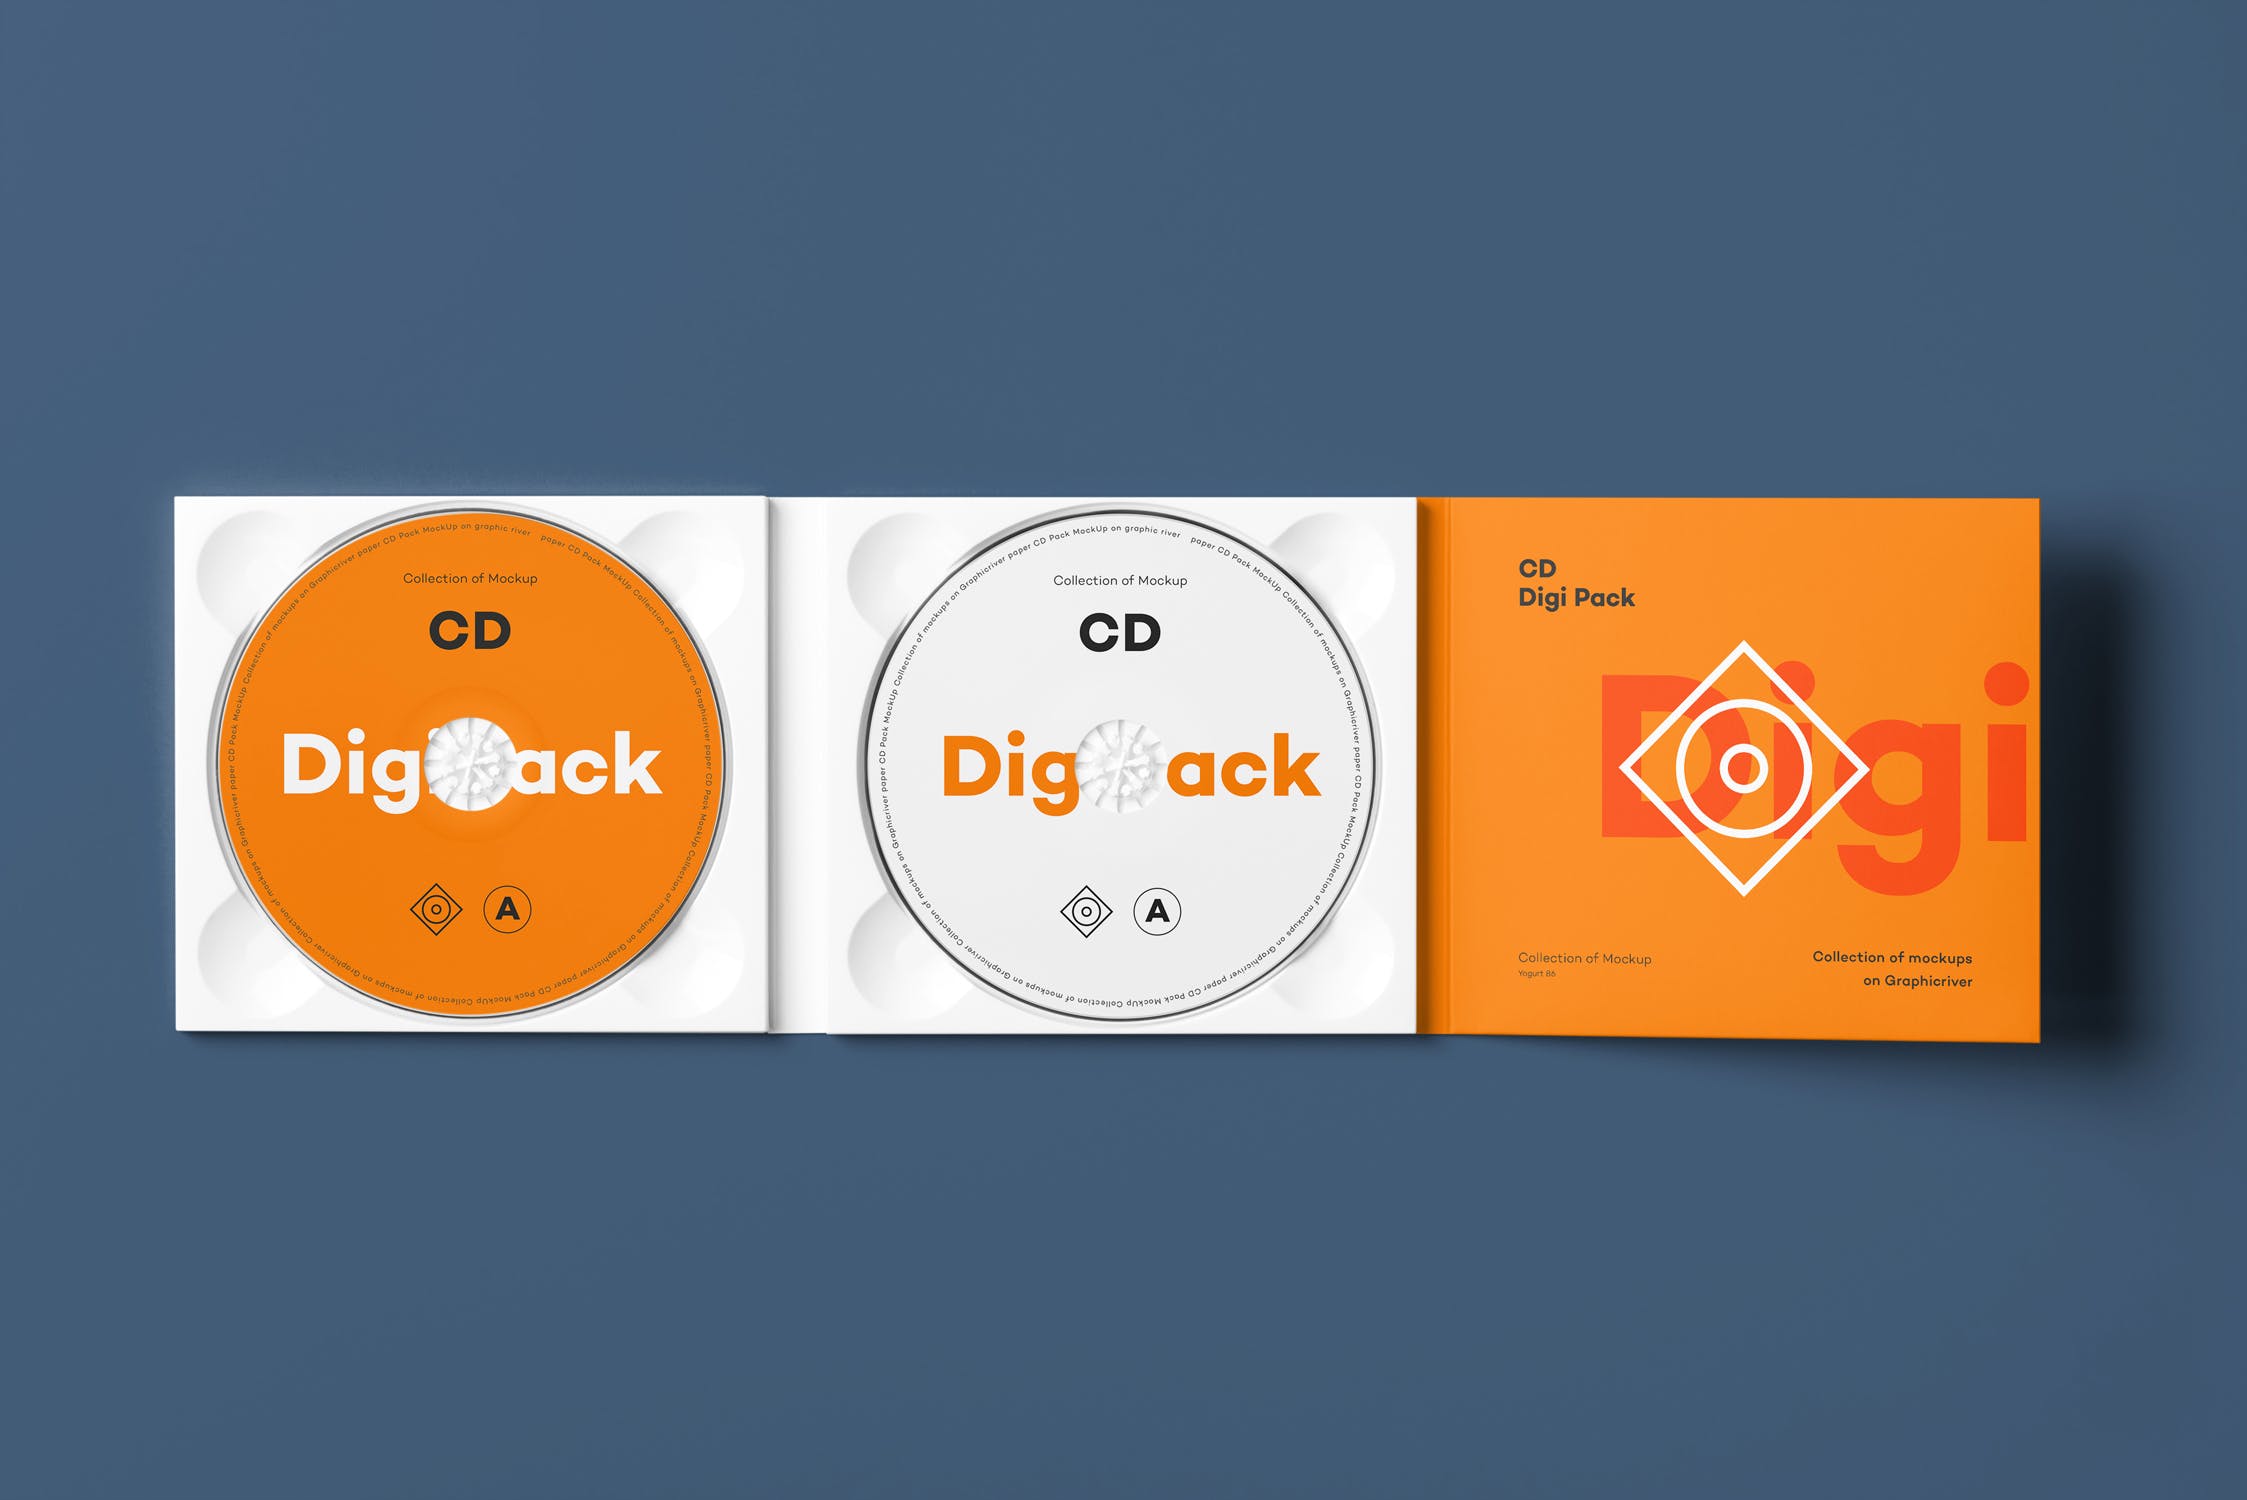 CD光碟封面&包装盒设计图蚂蚁素材精选模板v8 CD Digi Pack Mock-up 8插图(7)